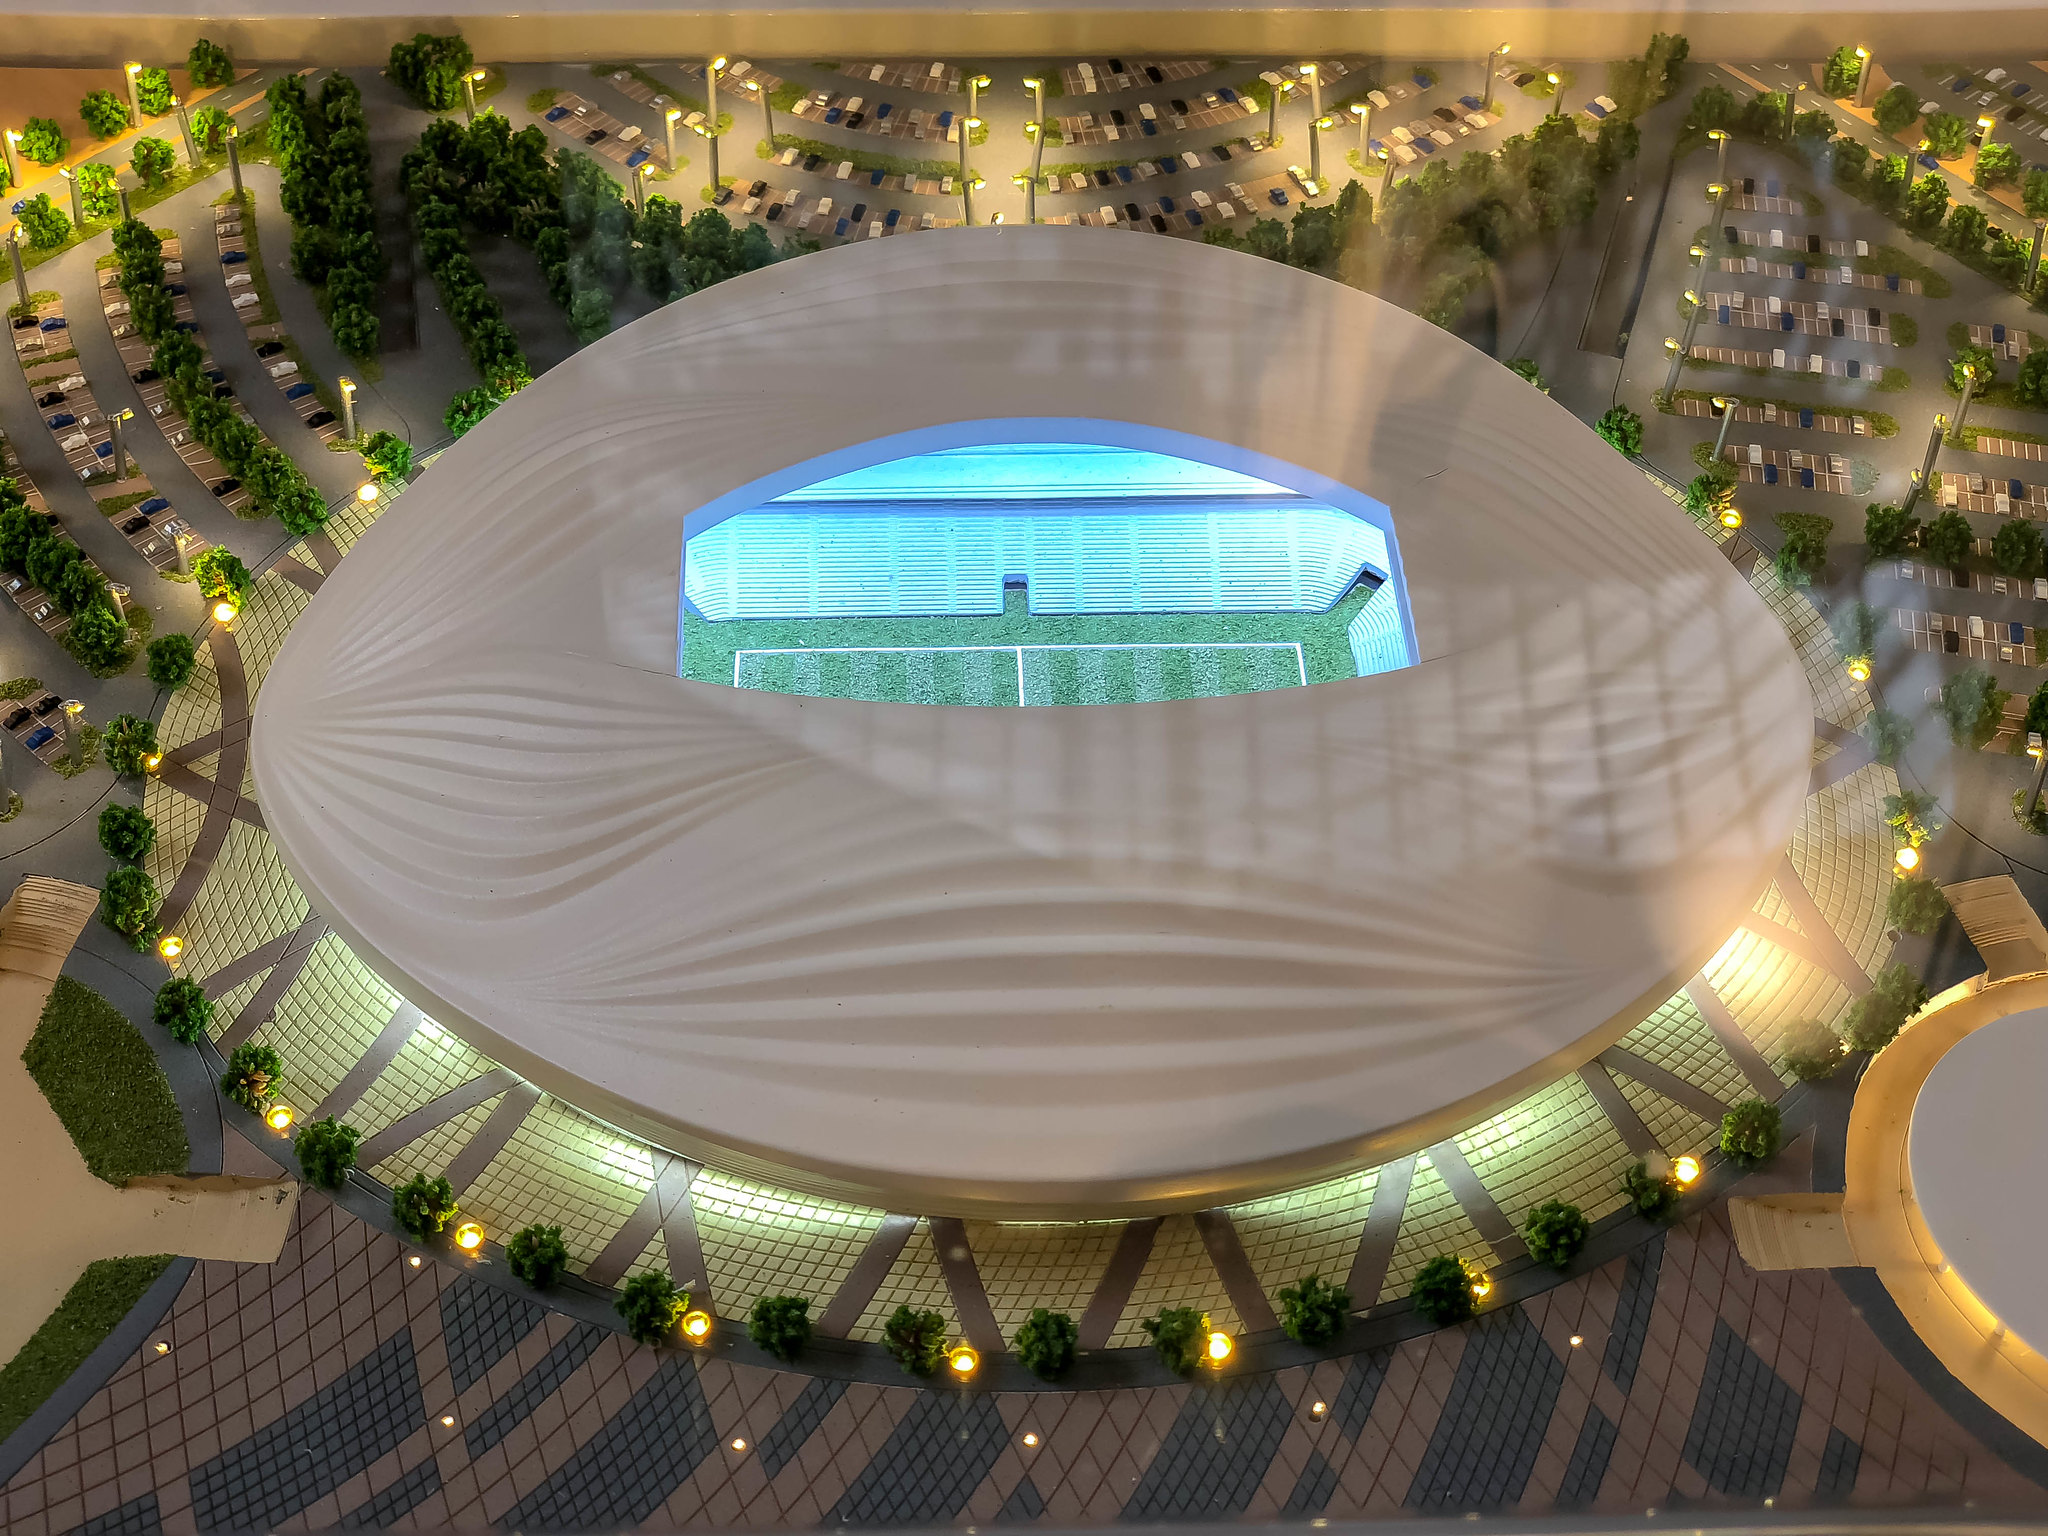 Projeto do Estádio Al Janoub, de Zaha Hadid